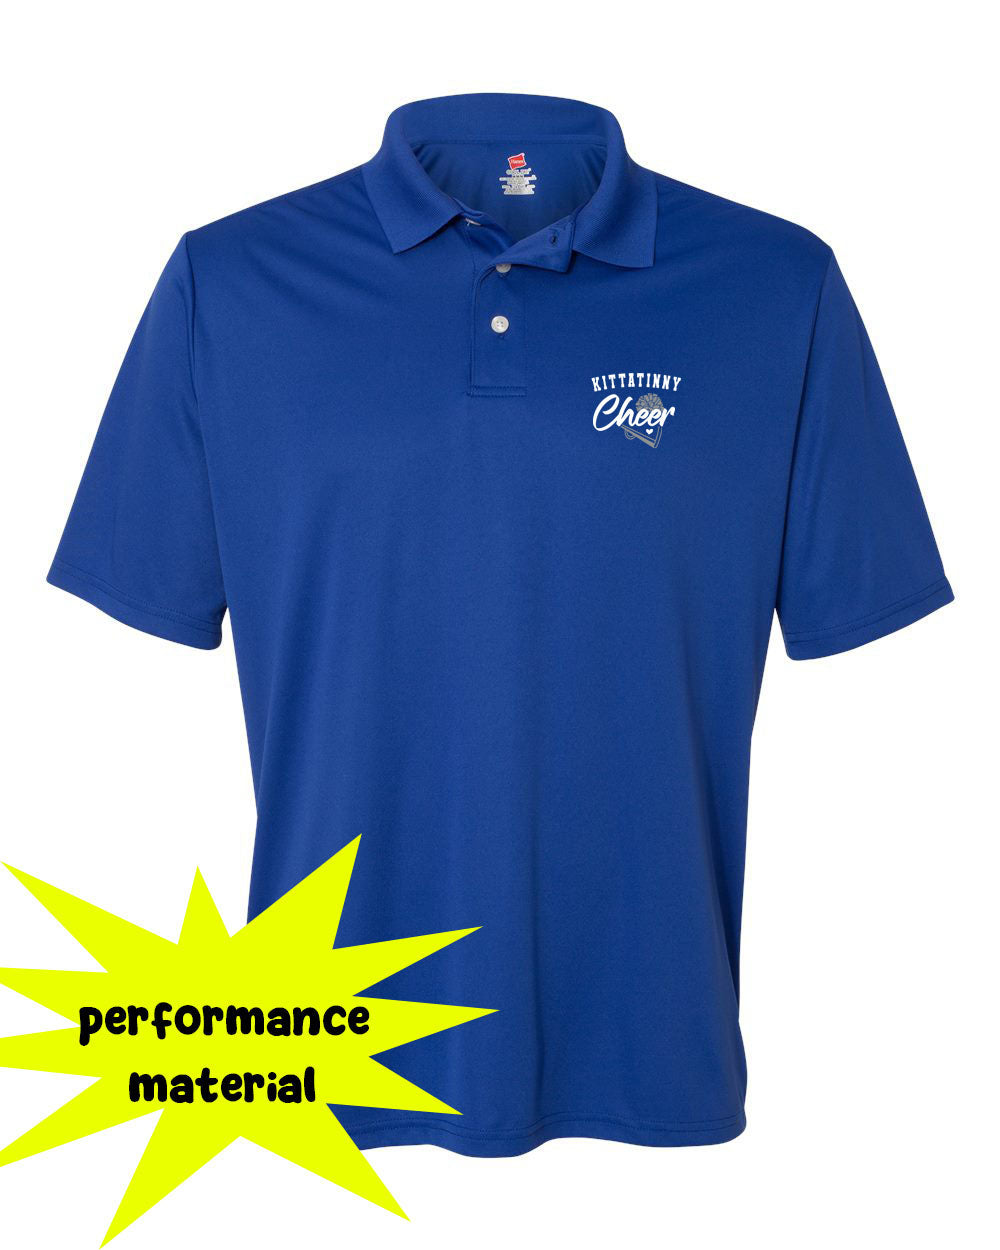 Kittatinny Cheer Performance Material Polo T-Shirt Design 9